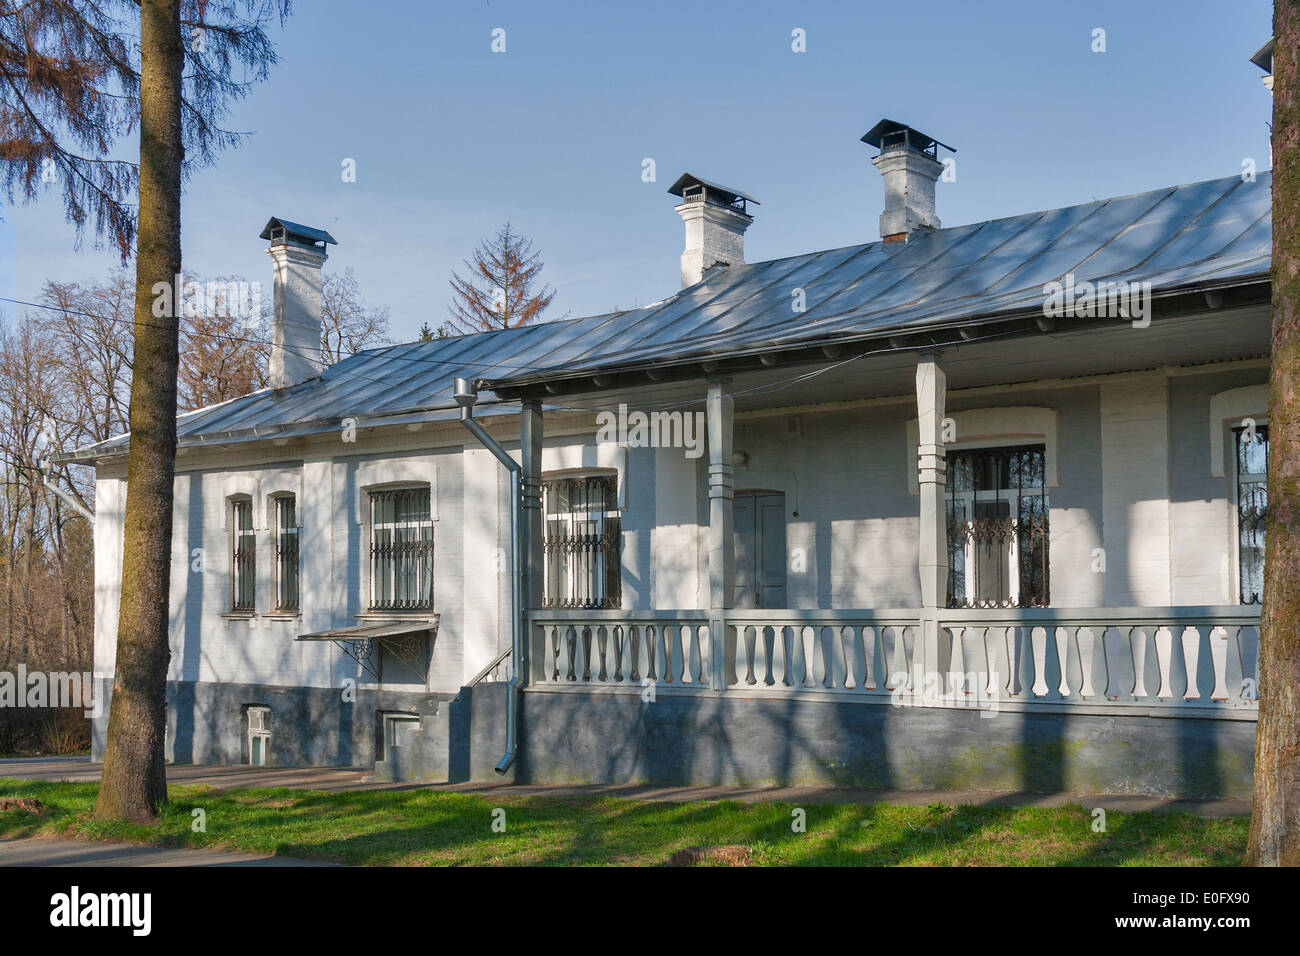 Family House Estate of Nikolay Pirogov, a prominent Russian and Ukrainian surgeon. It was built 1866 in Vinnitsa, Ukraine. Stock Photo